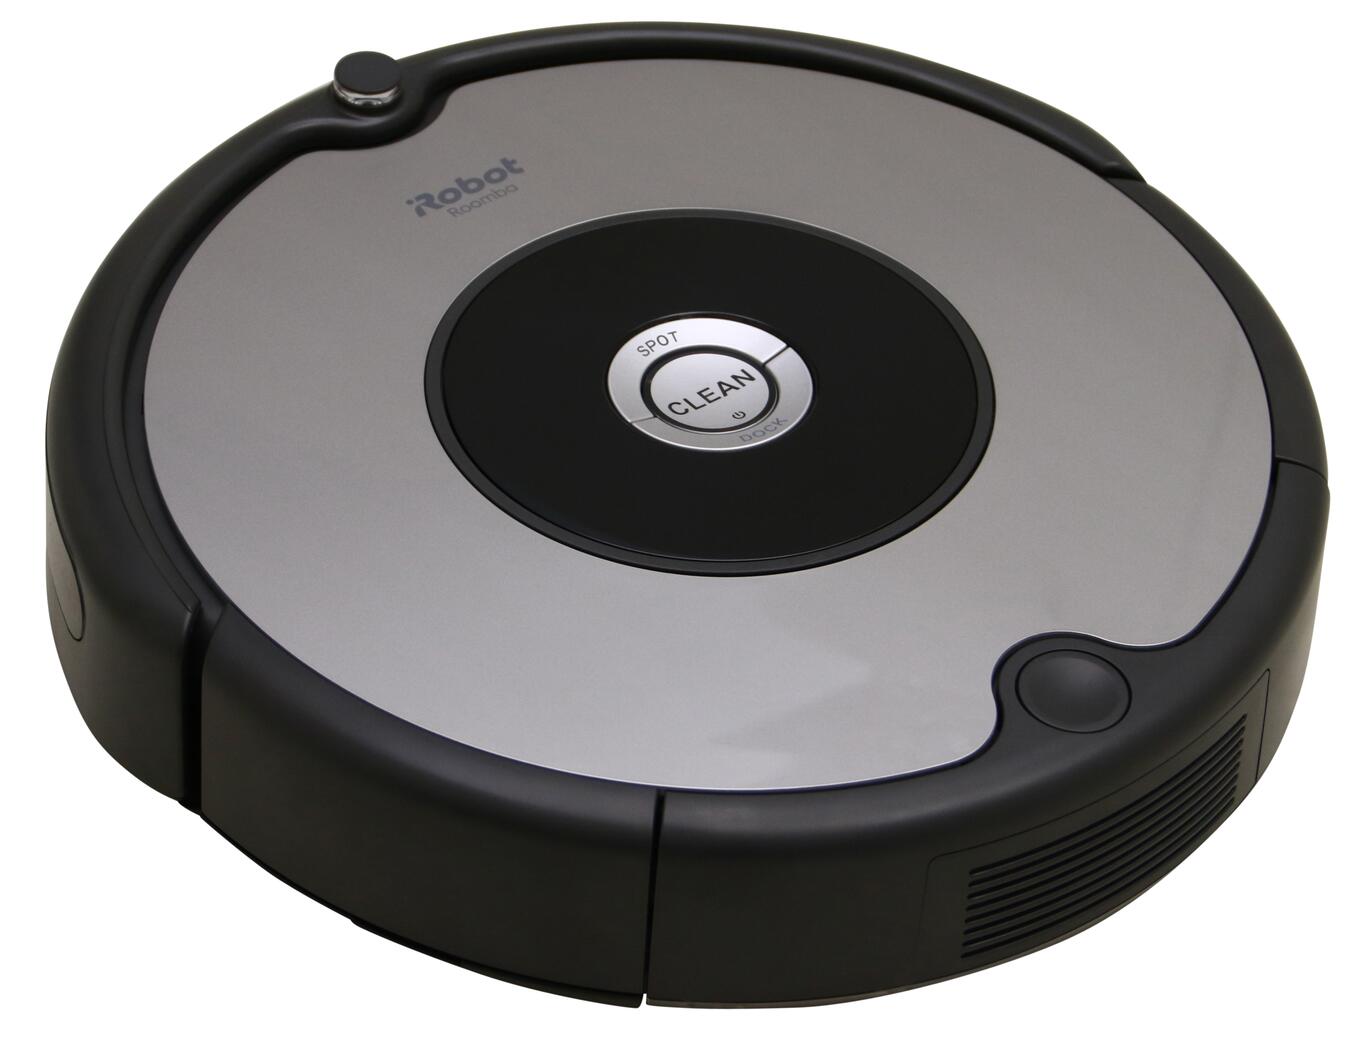 Roomba 604 iRobot